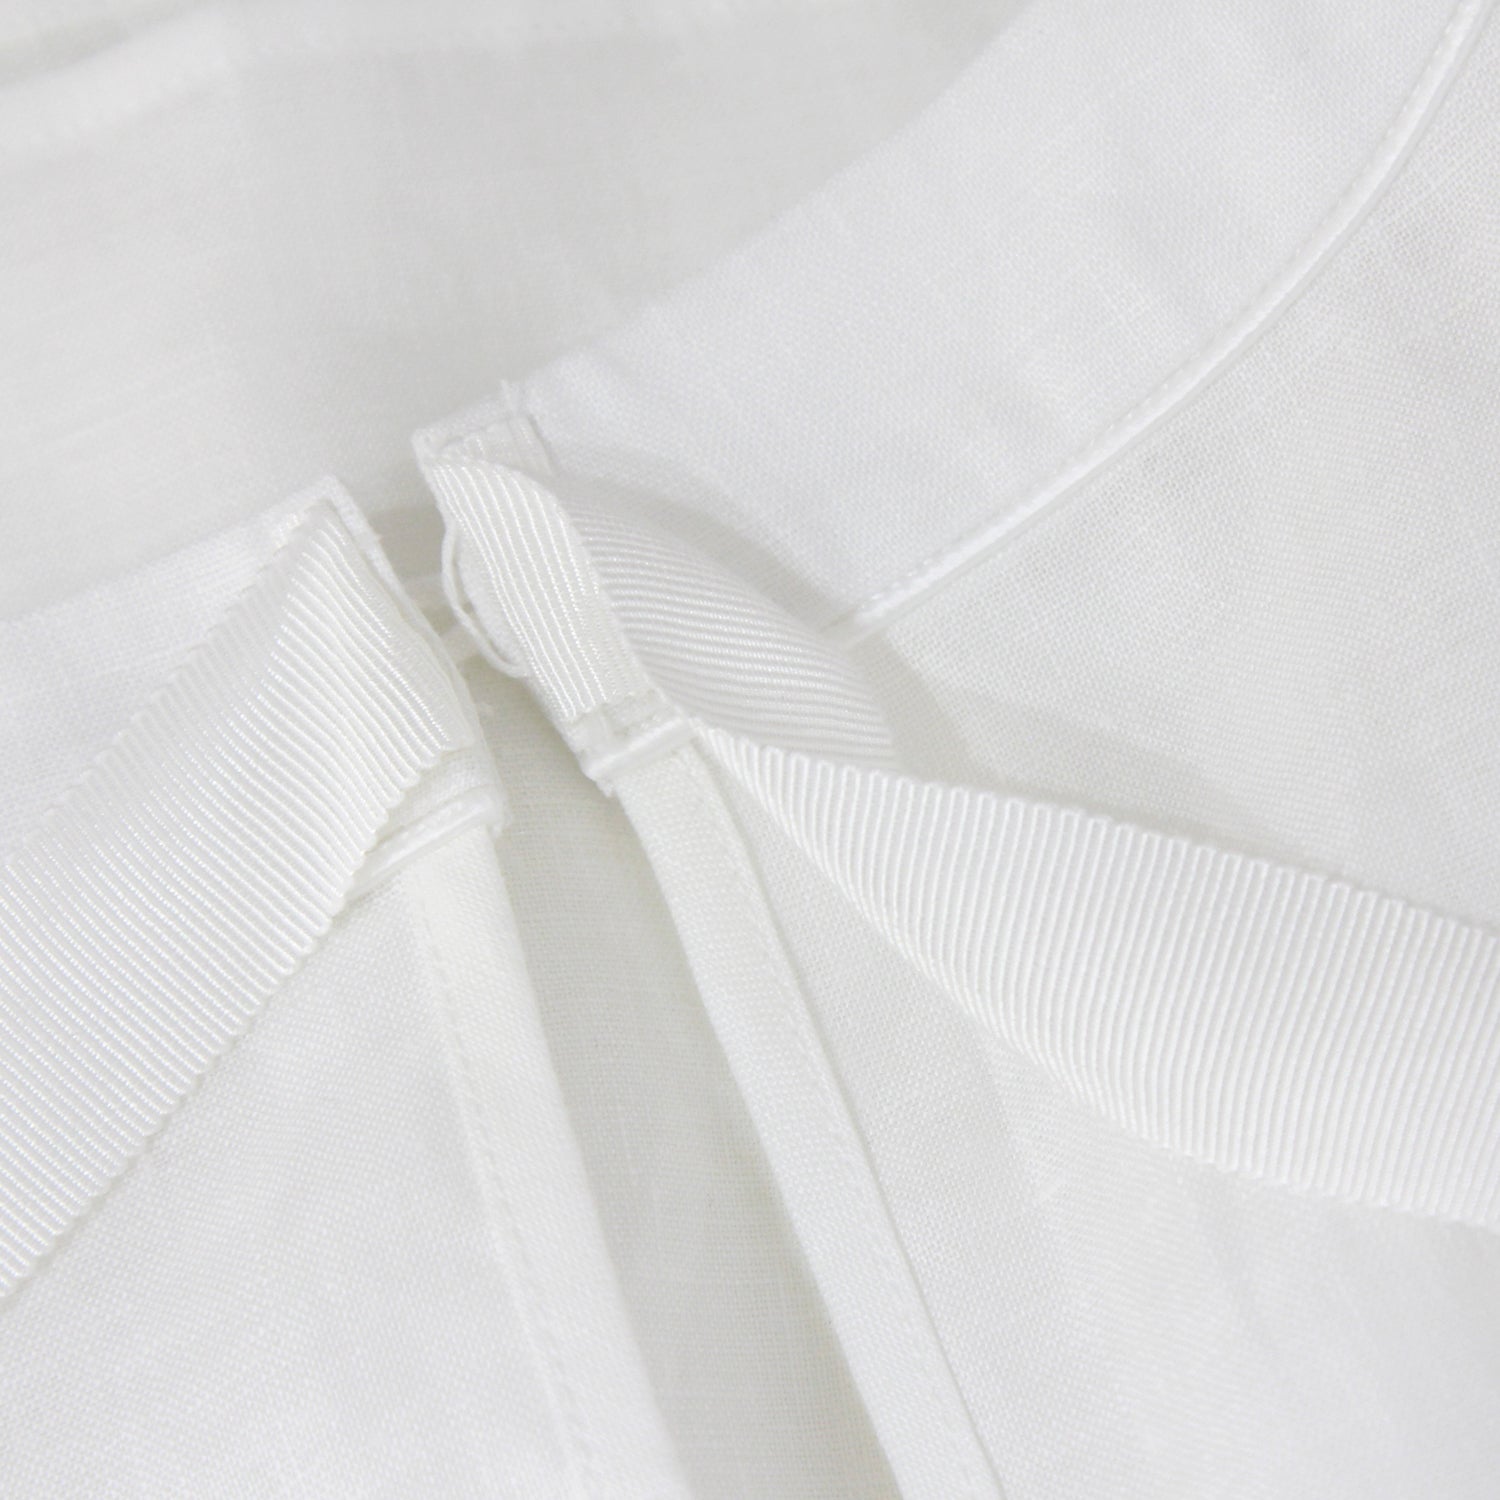 Stylish Valencia Linen Dress in White by Gosia Orlowska